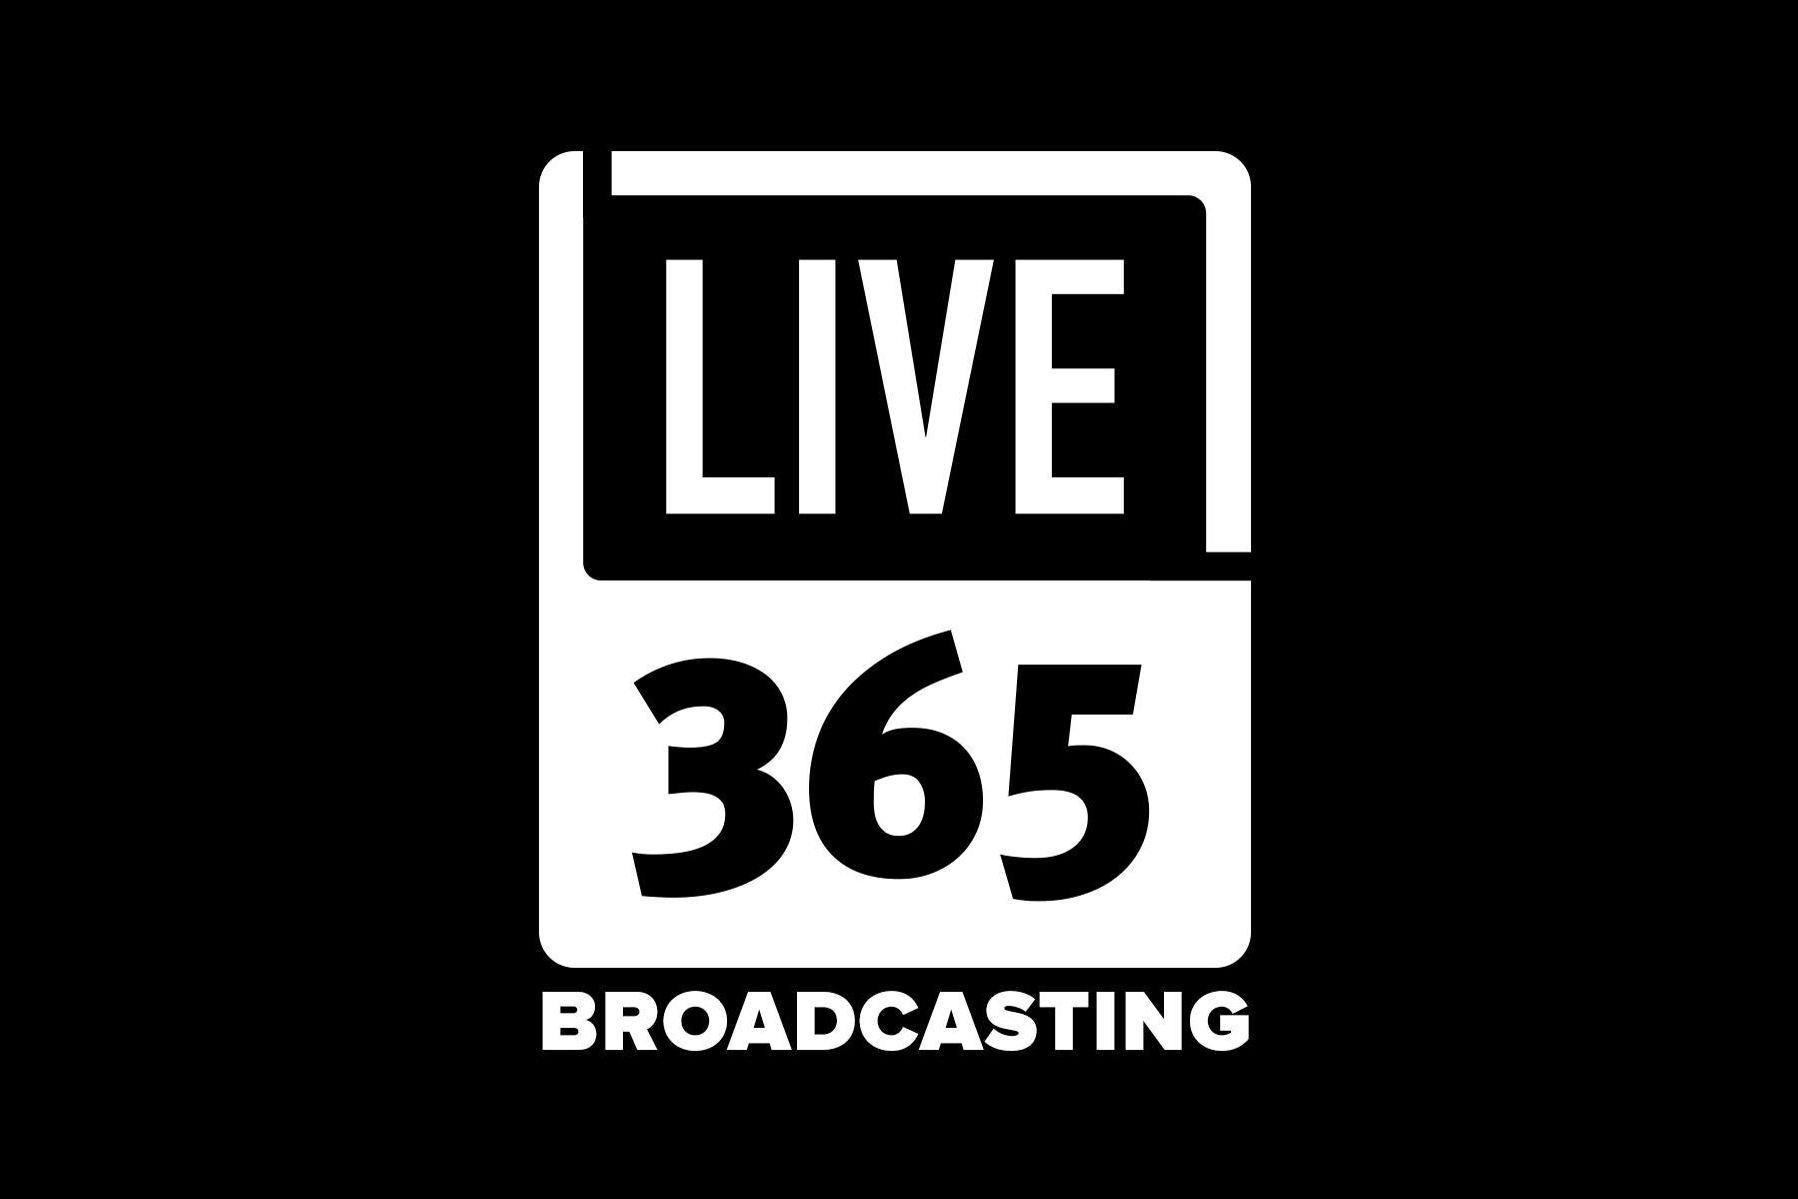 365 live